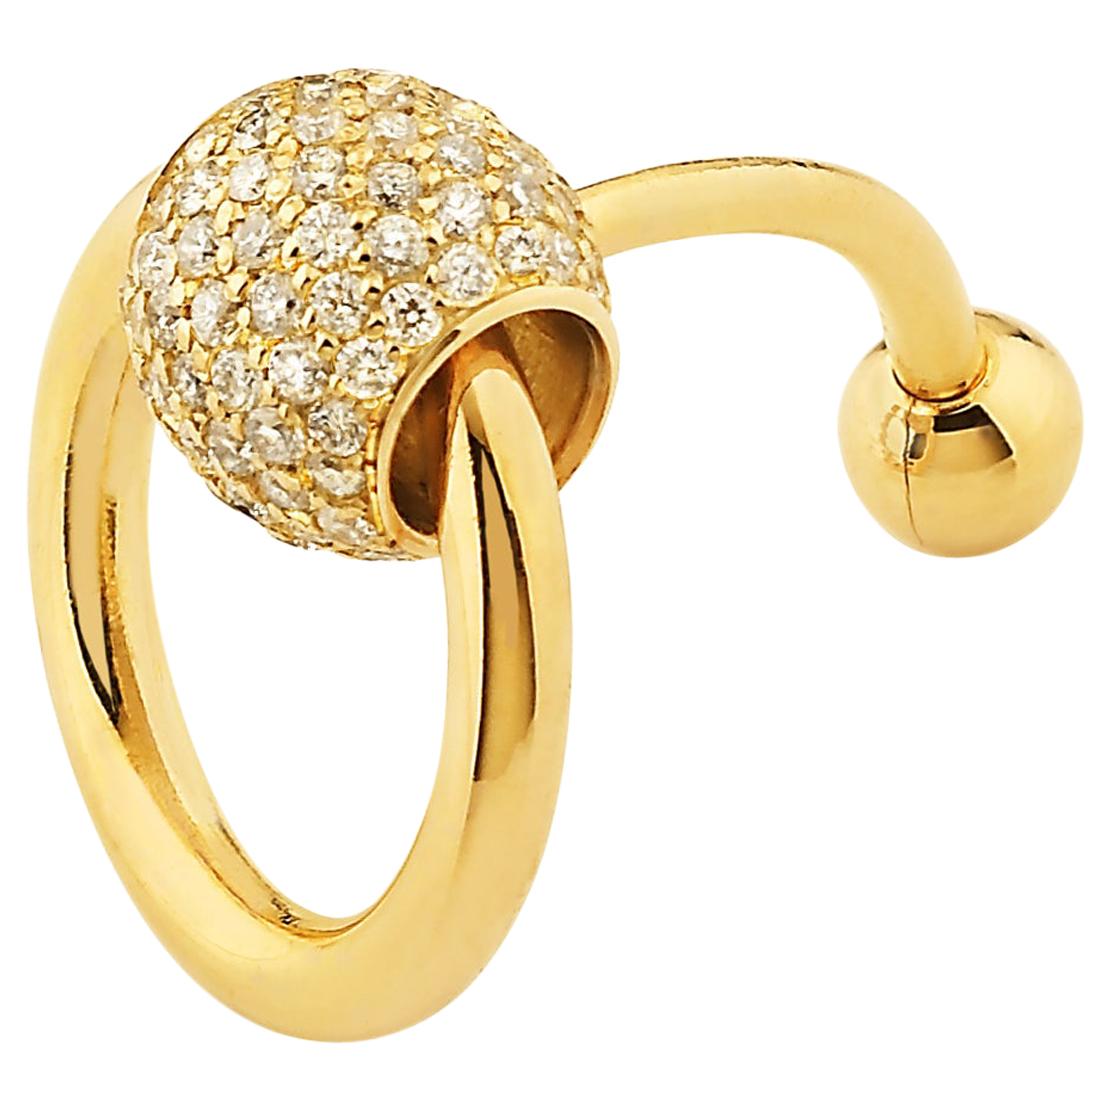 Betony Vernon "O-Ring Bauchnabelpiercing" Piercing 18K Gold Pavée Diamant im Angebot